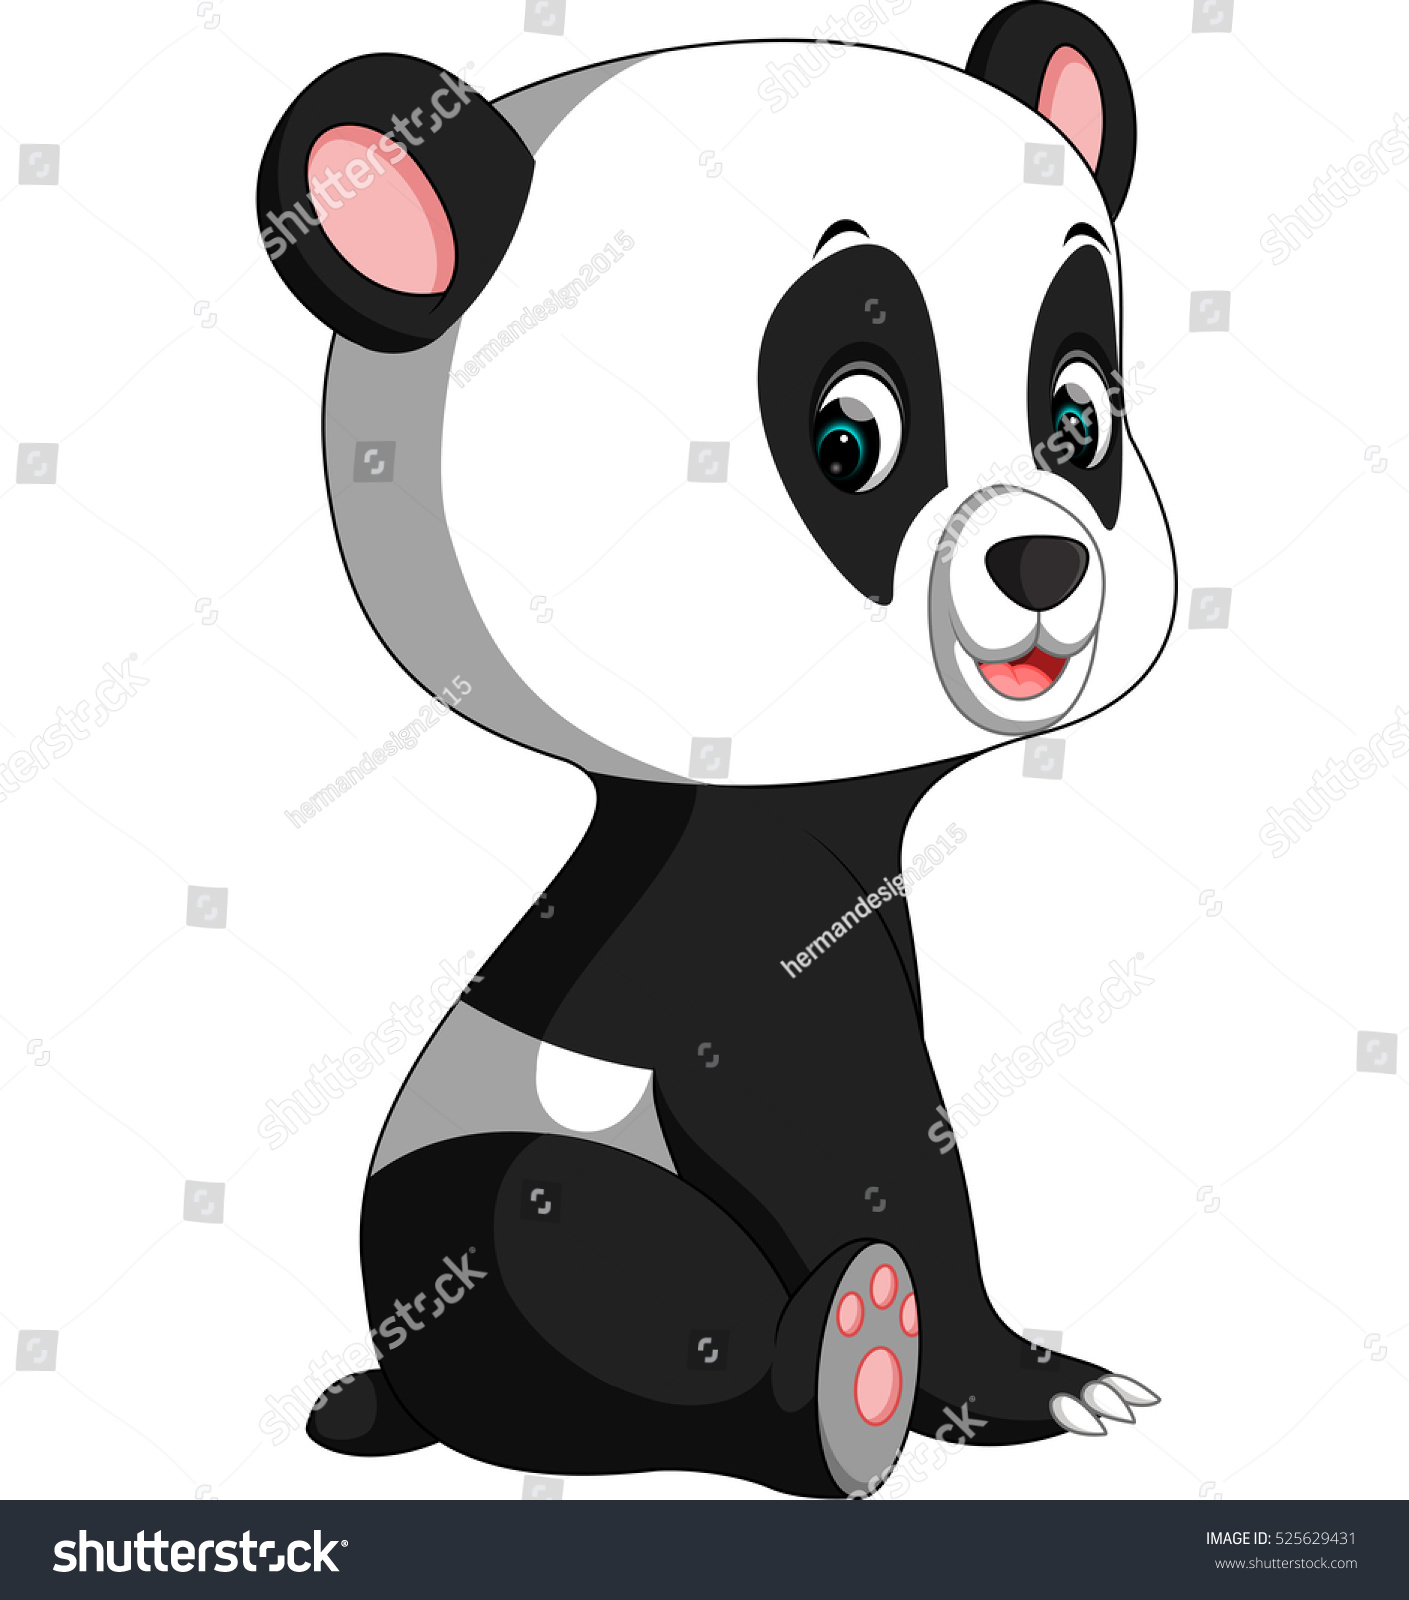 Cute Panda Cartoon Stock Photo 525629431 : Shutterstock